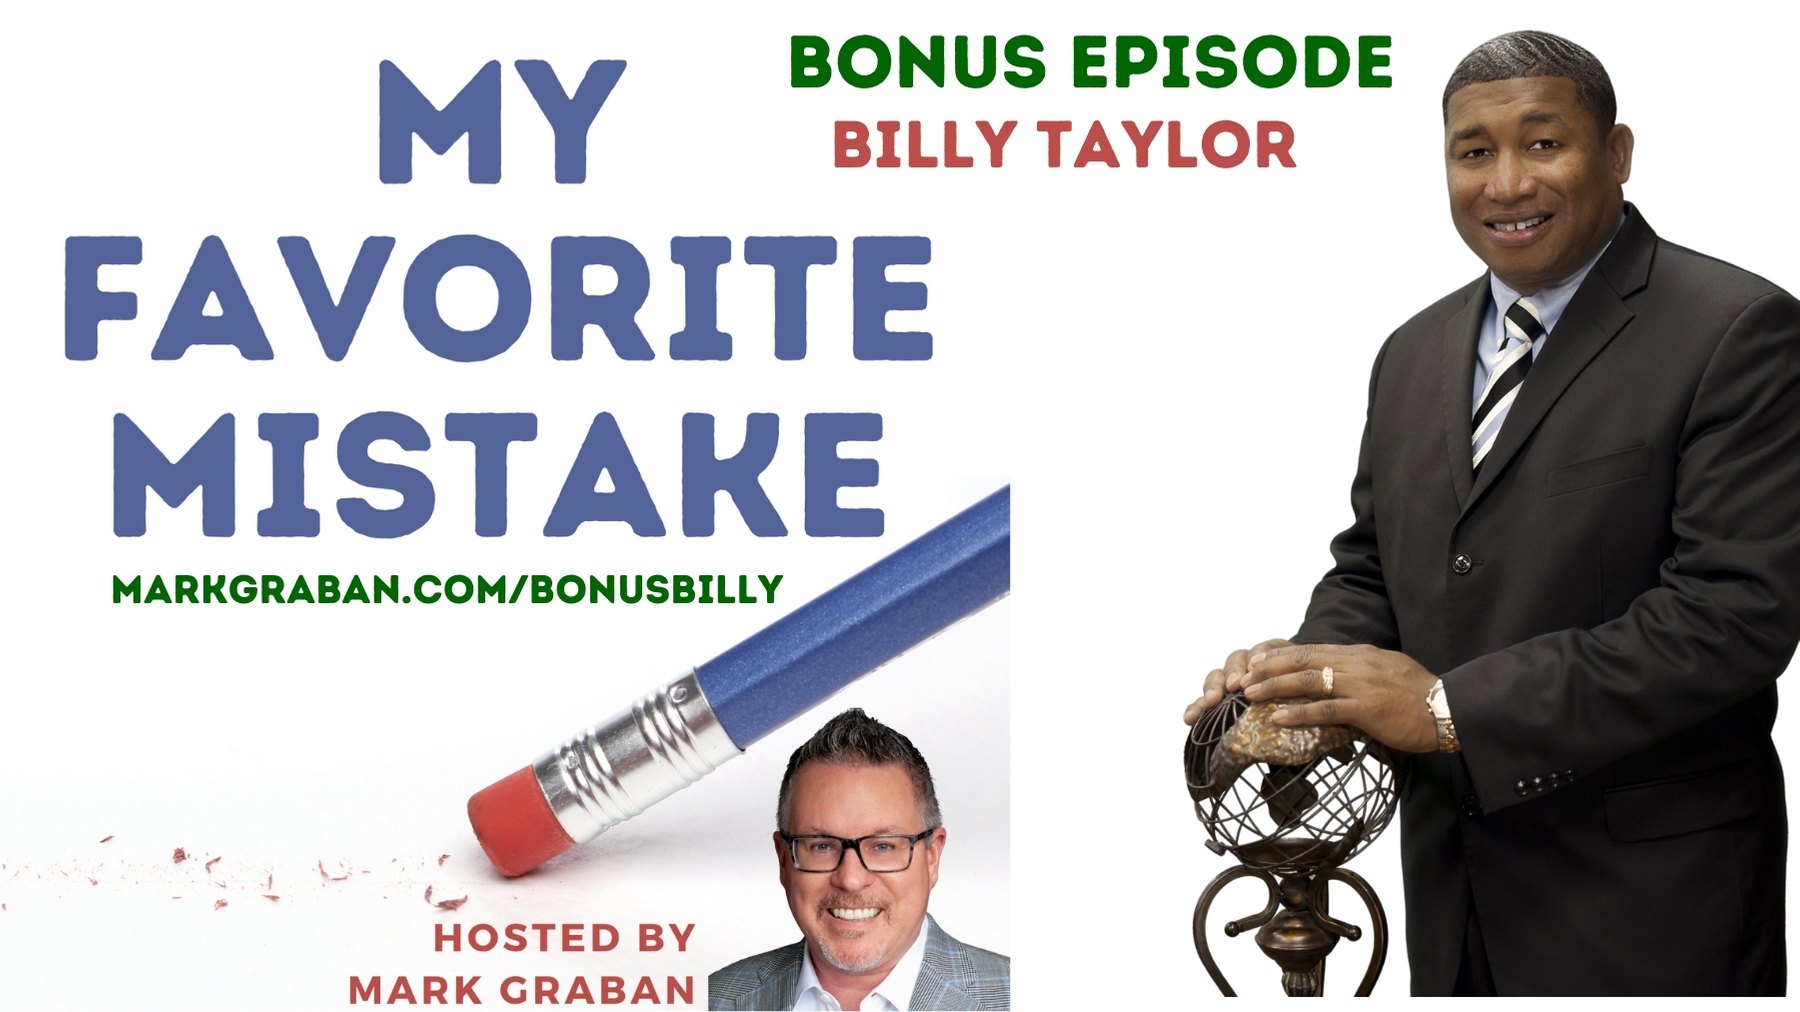 Bonus Episode: Follow Up Conversation with Billy Taylor